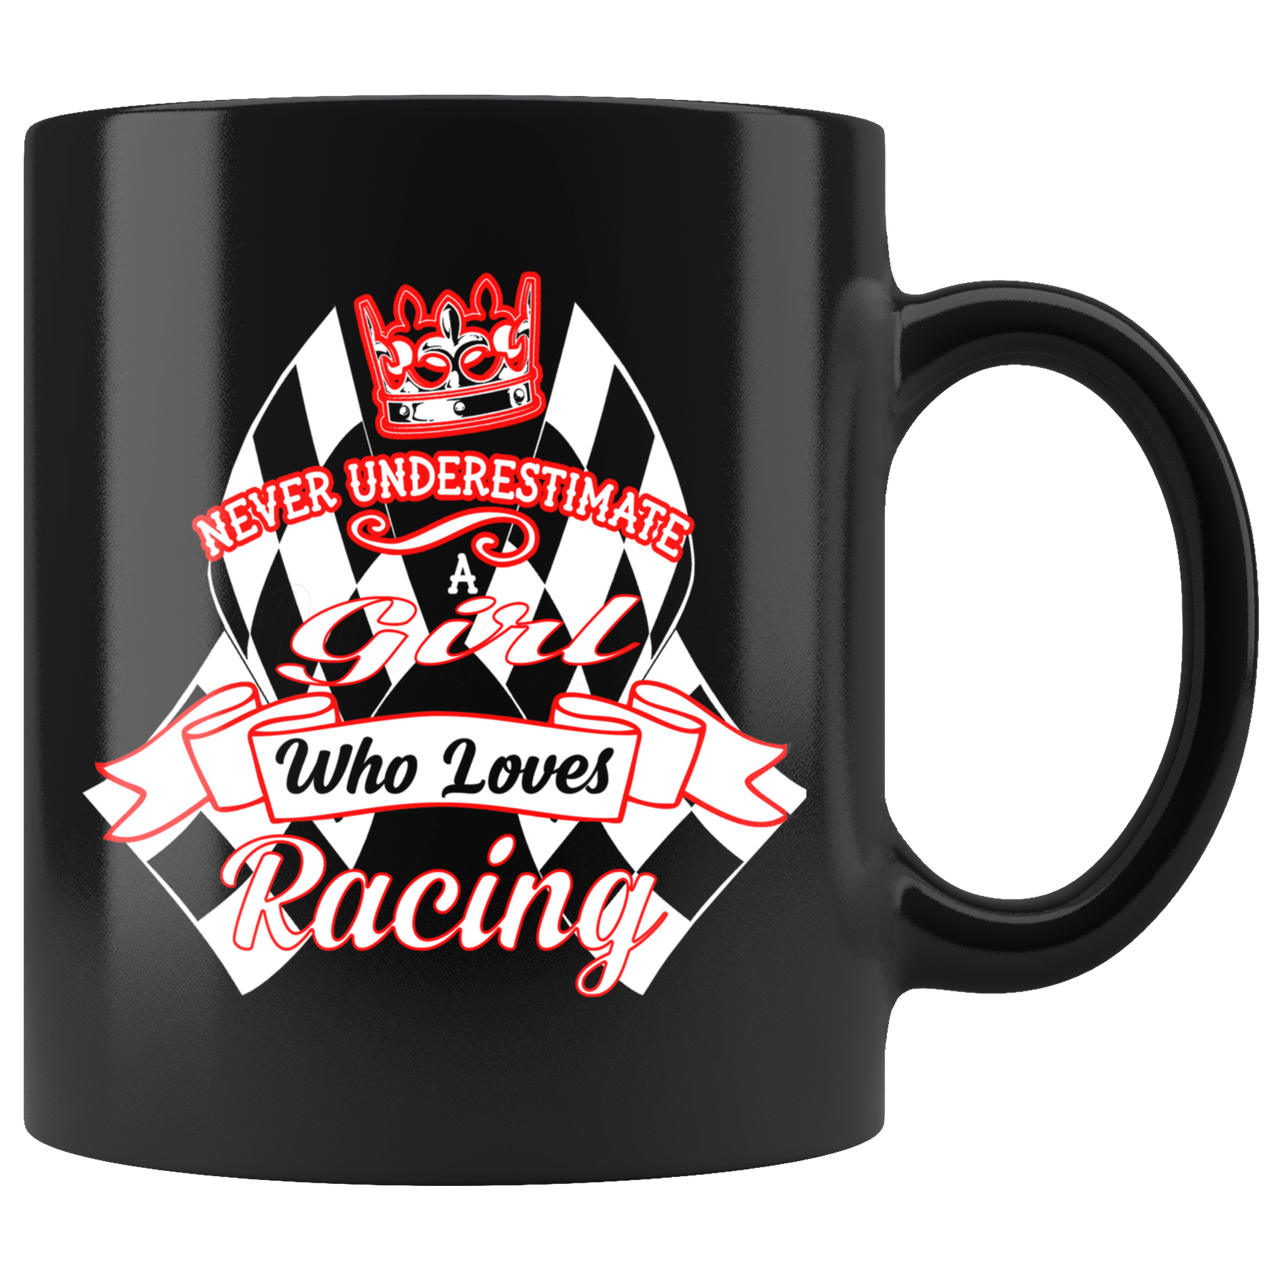 Never Underestimate A Girl Who Loves Racing Mug!